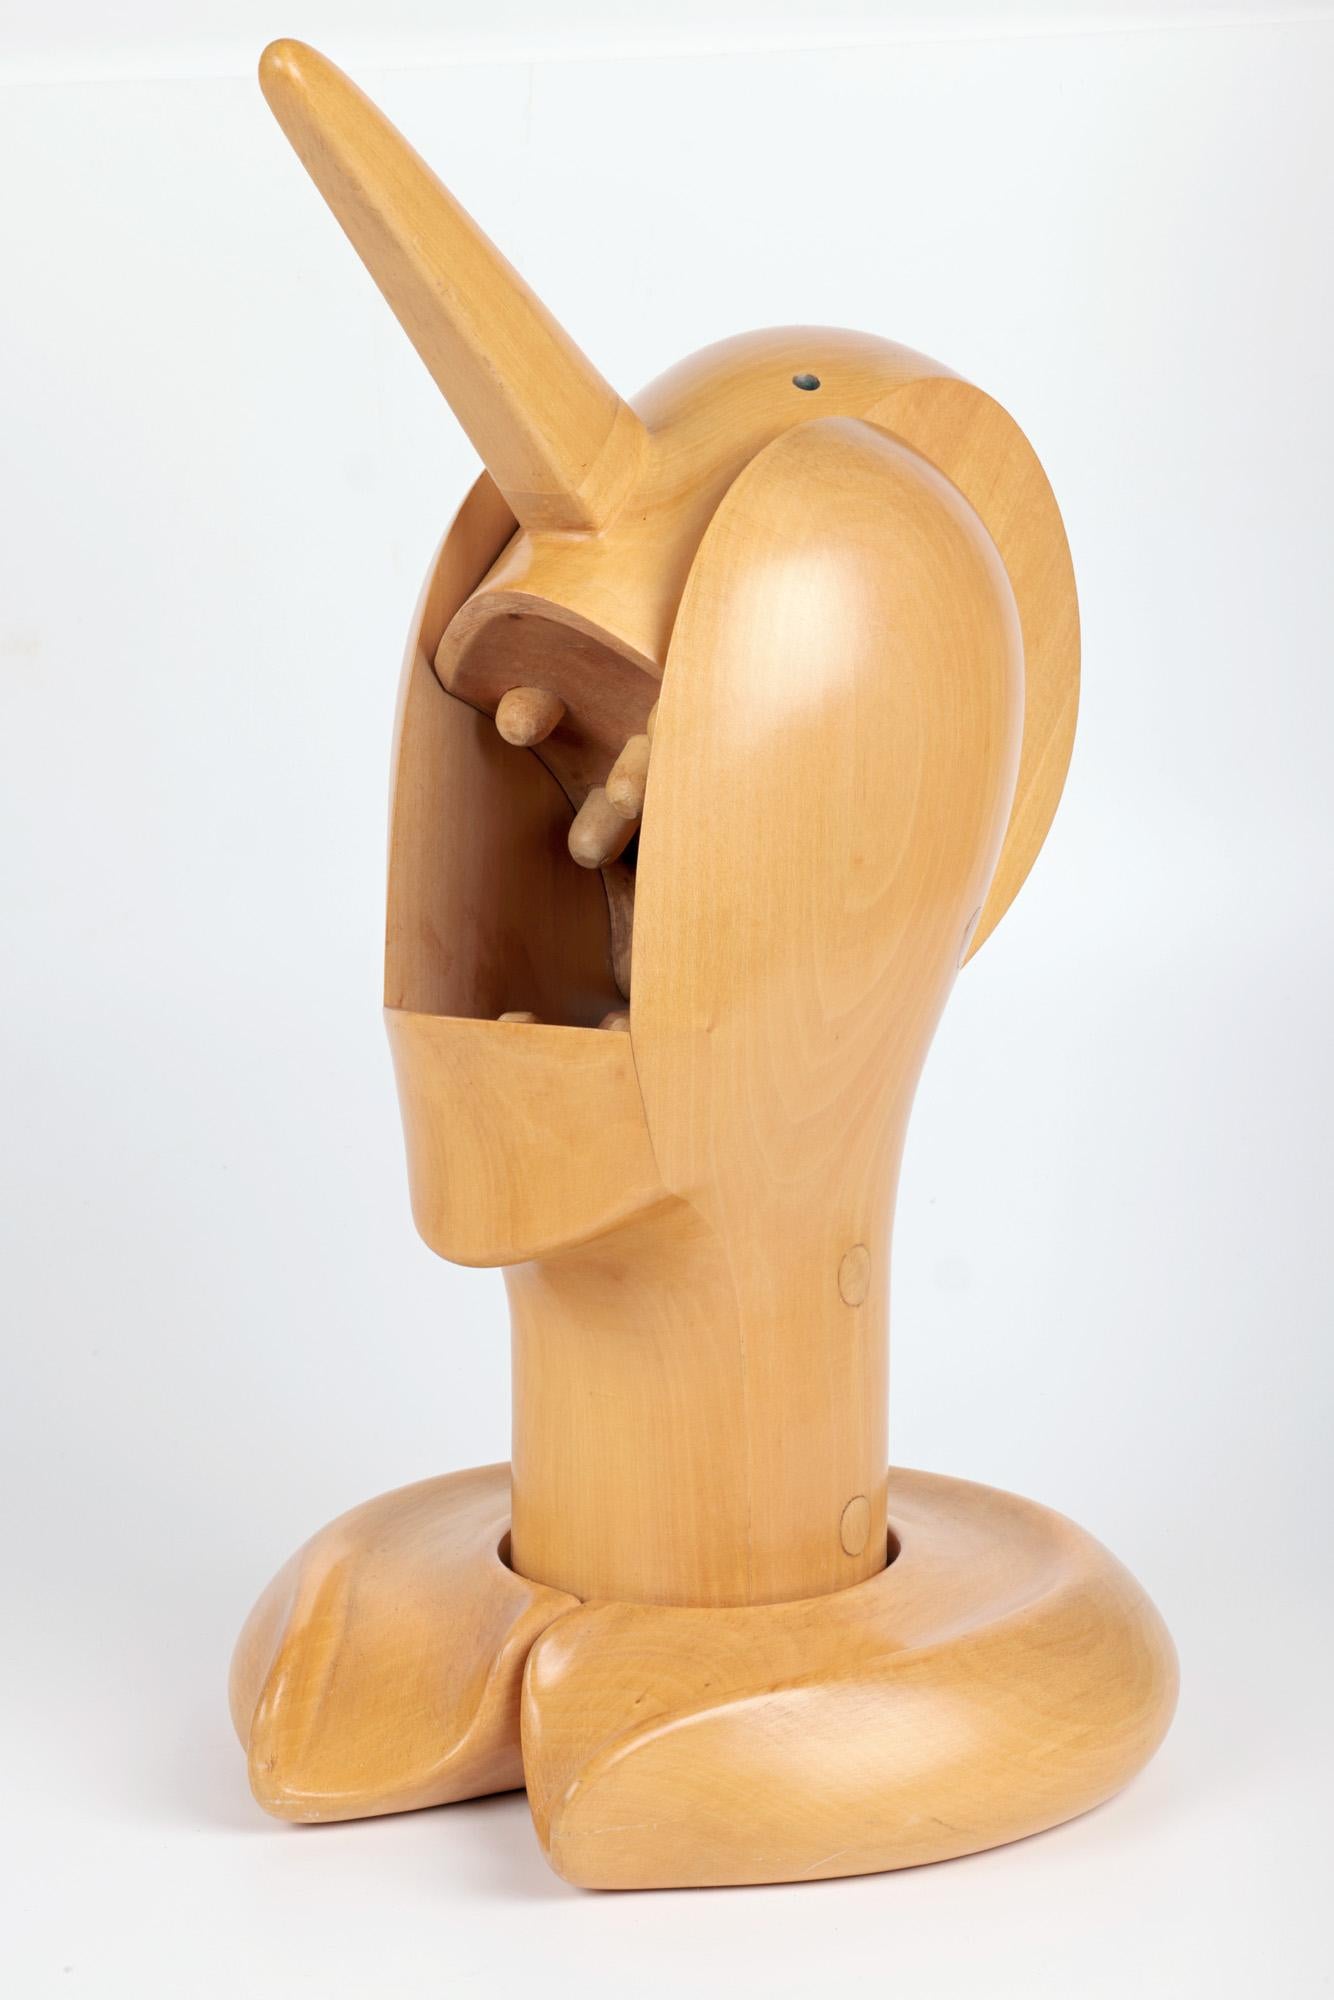 Wood Alfonso Bini Firenze Italian Carved Head Orange Squeezer For Sale